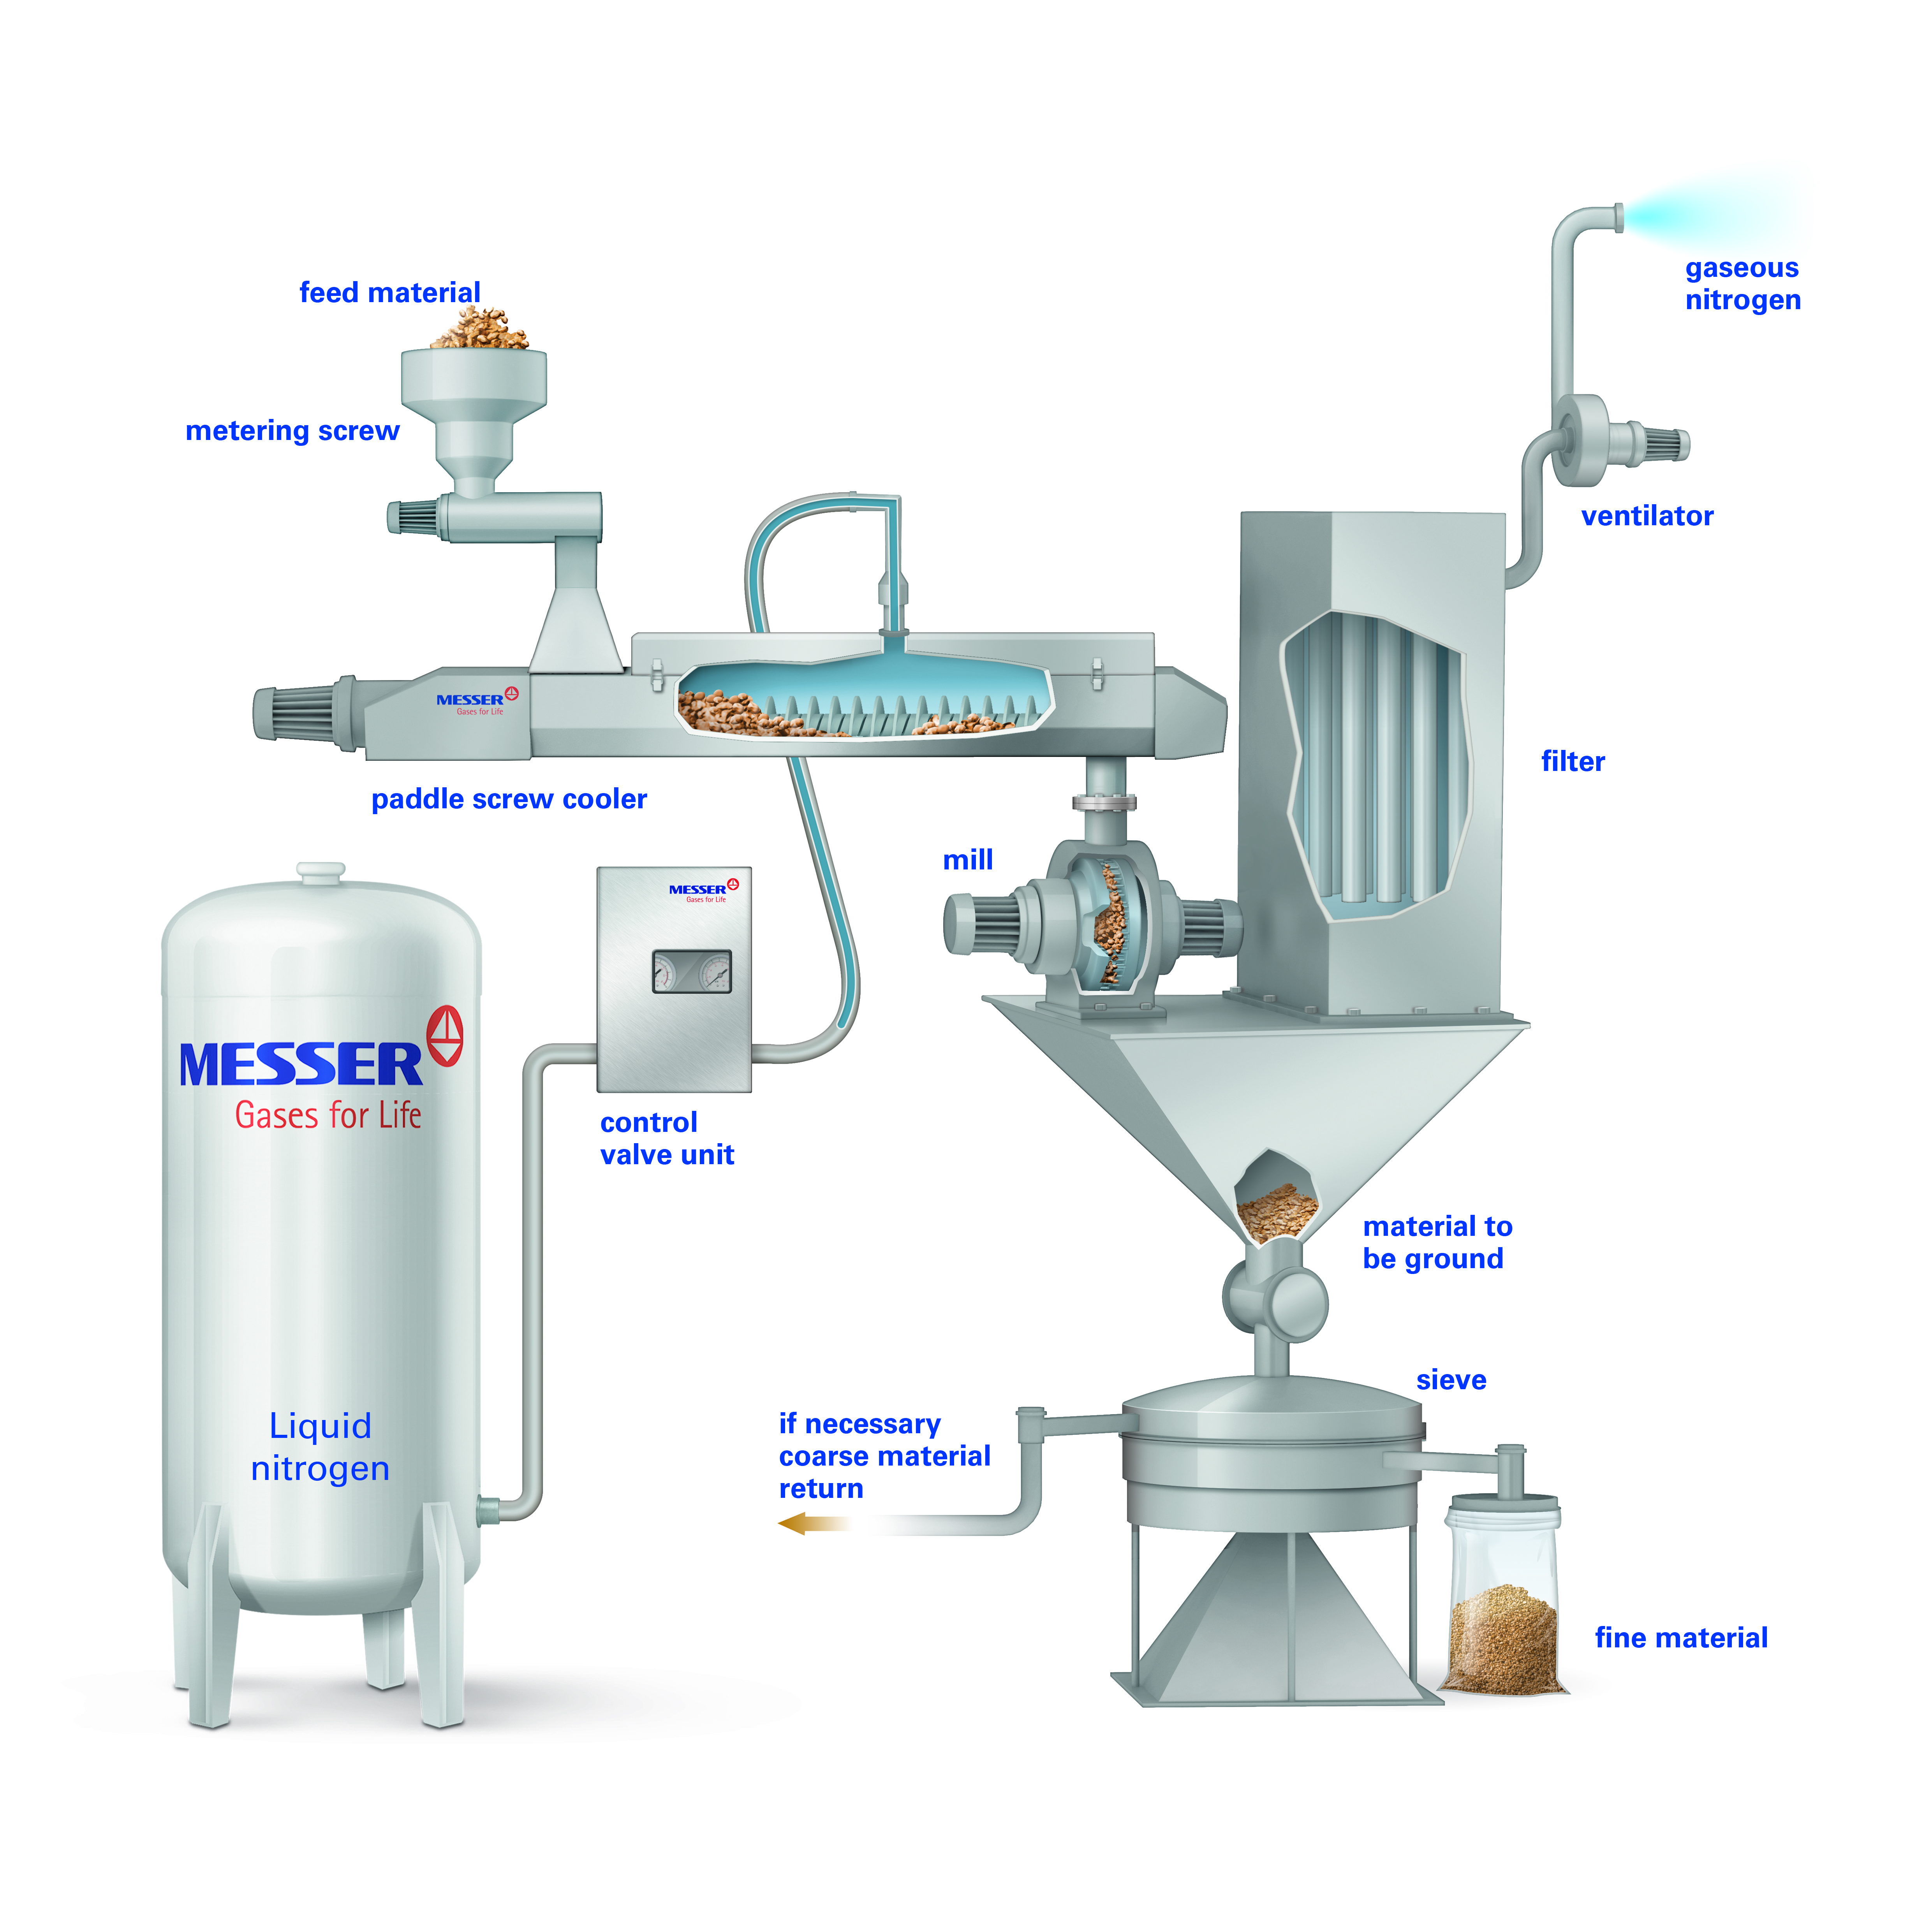 3/EN Cryogen technology for product cooling